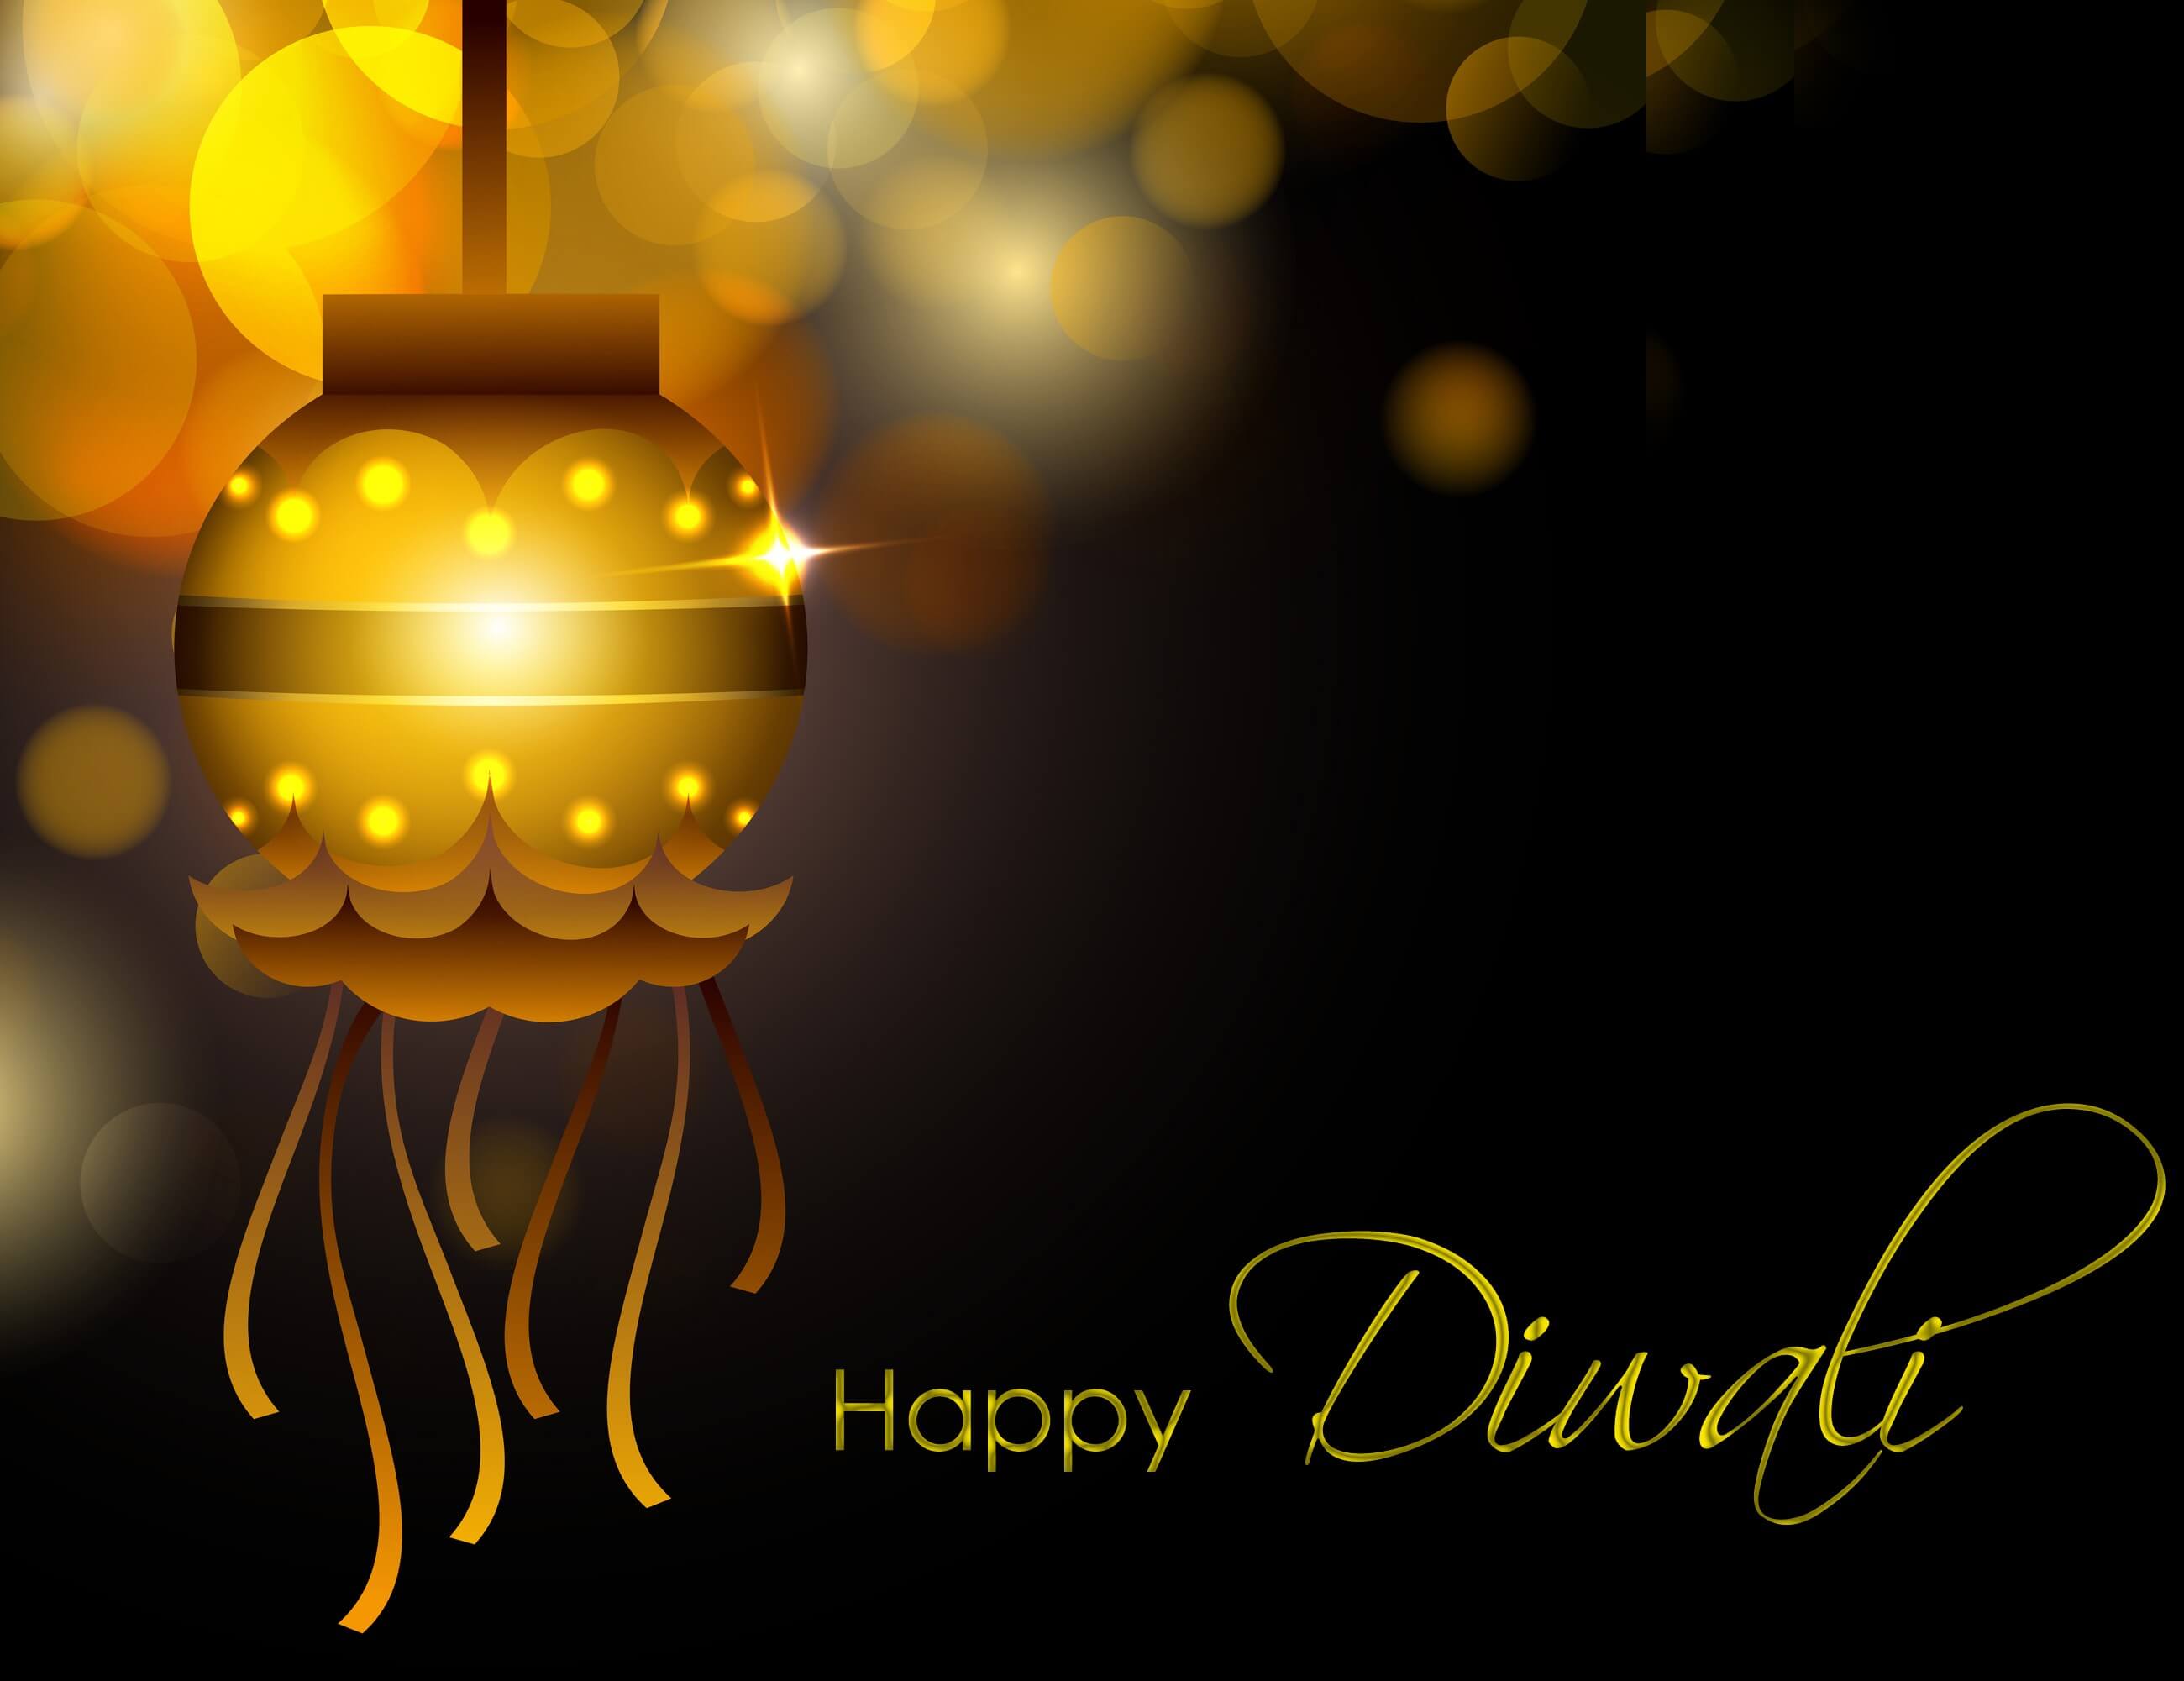 Download-Happy-Diwali-2015-HD-Wallpapers-facebook-mobile-desktop-cgfrog-22